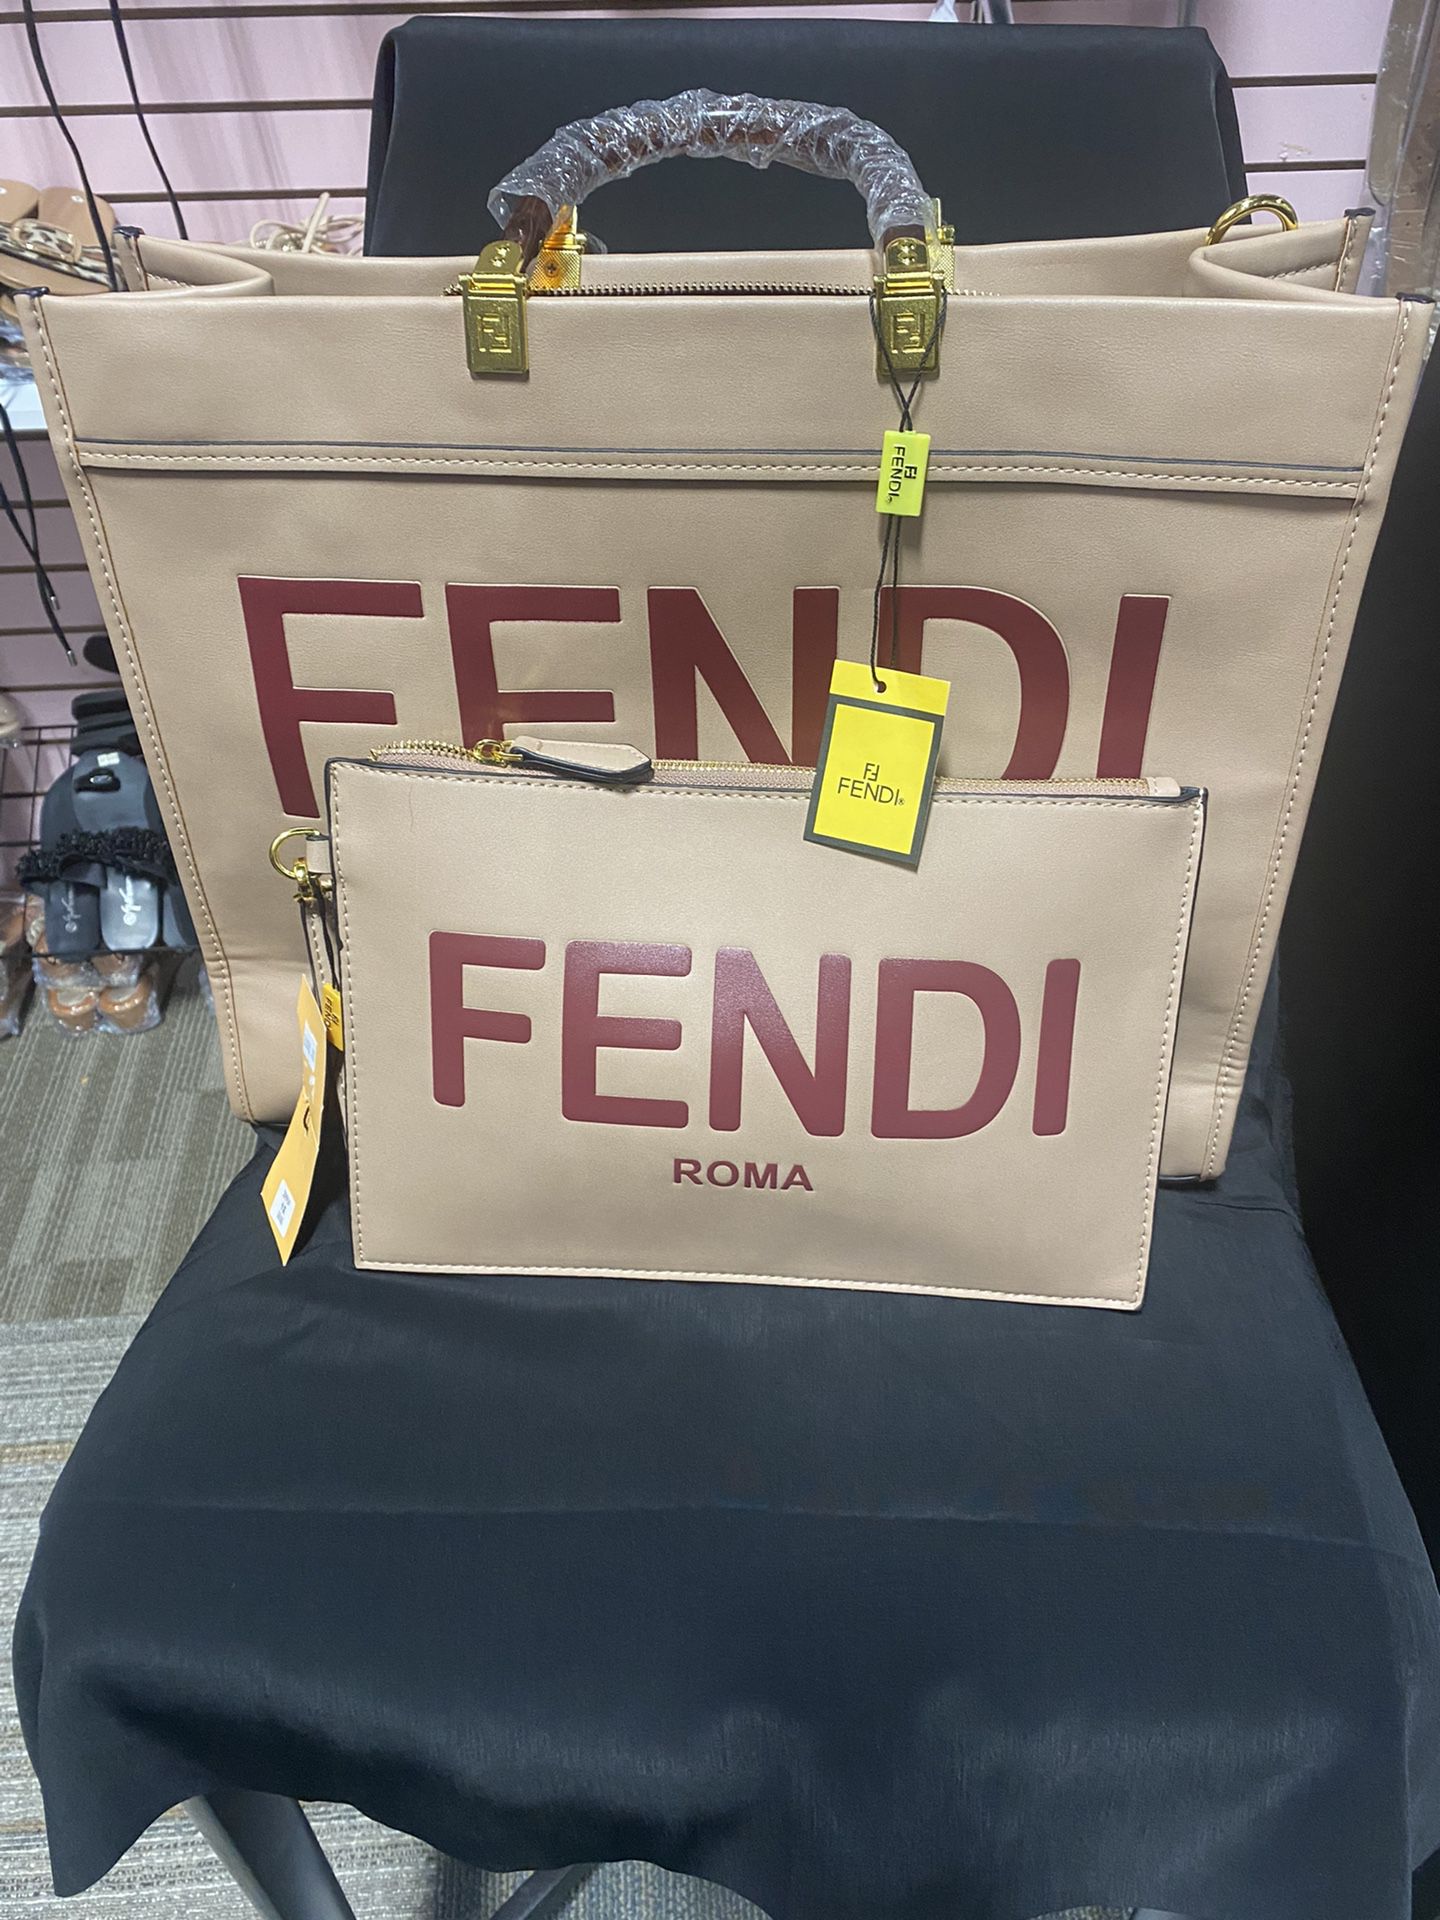 Fendi Large Bag With Pounch Purse 